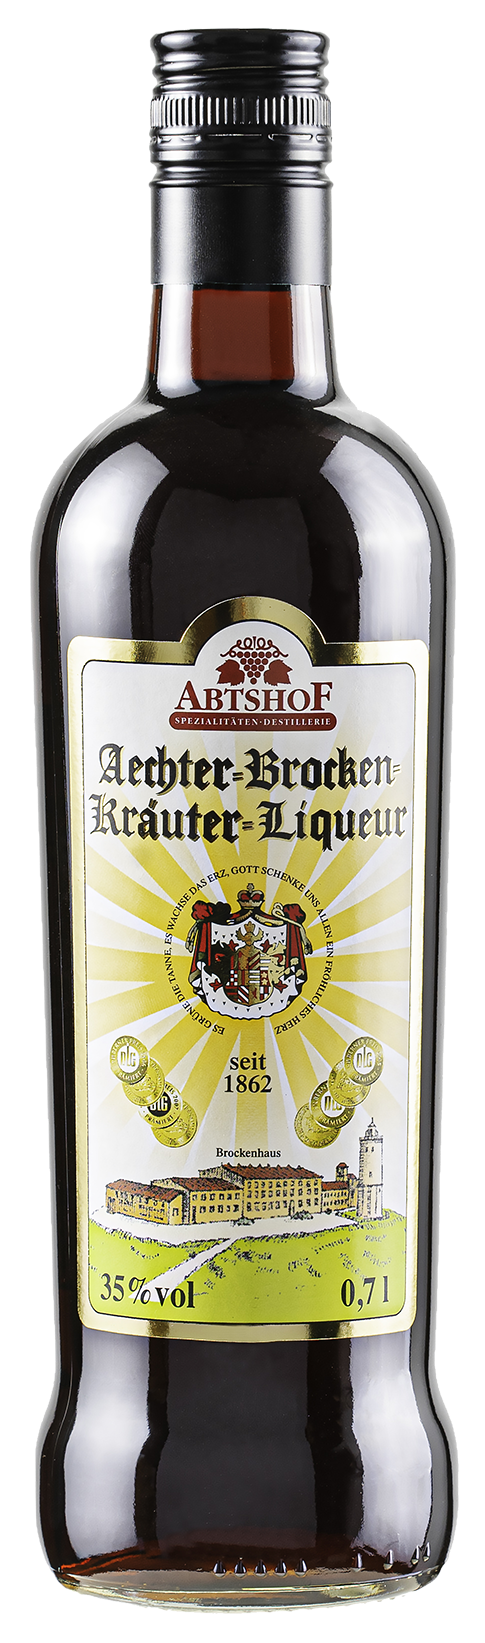 Aechter-Brocken-Herb-Liqueur® - 0.7 L / 35% vol. (Herbal liqueur)